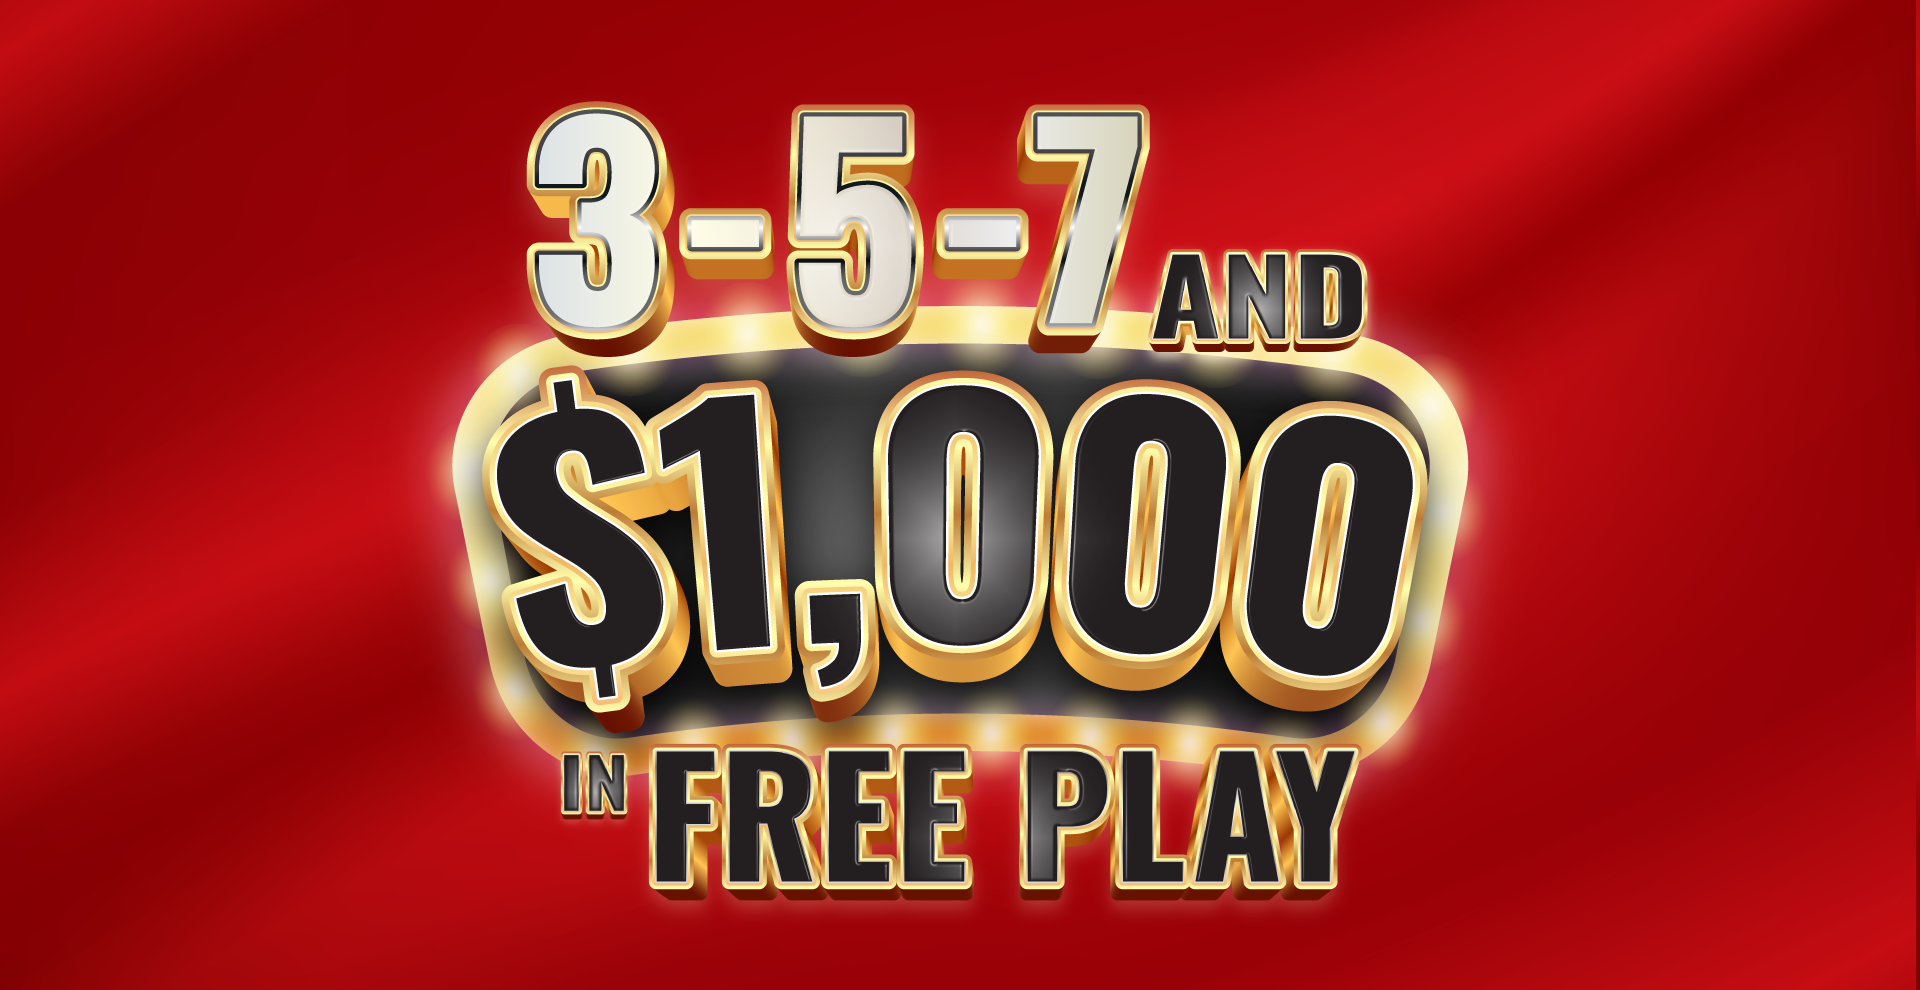 Macau Casino Lakewood | 3-5-7 and $1,000 in Free Play